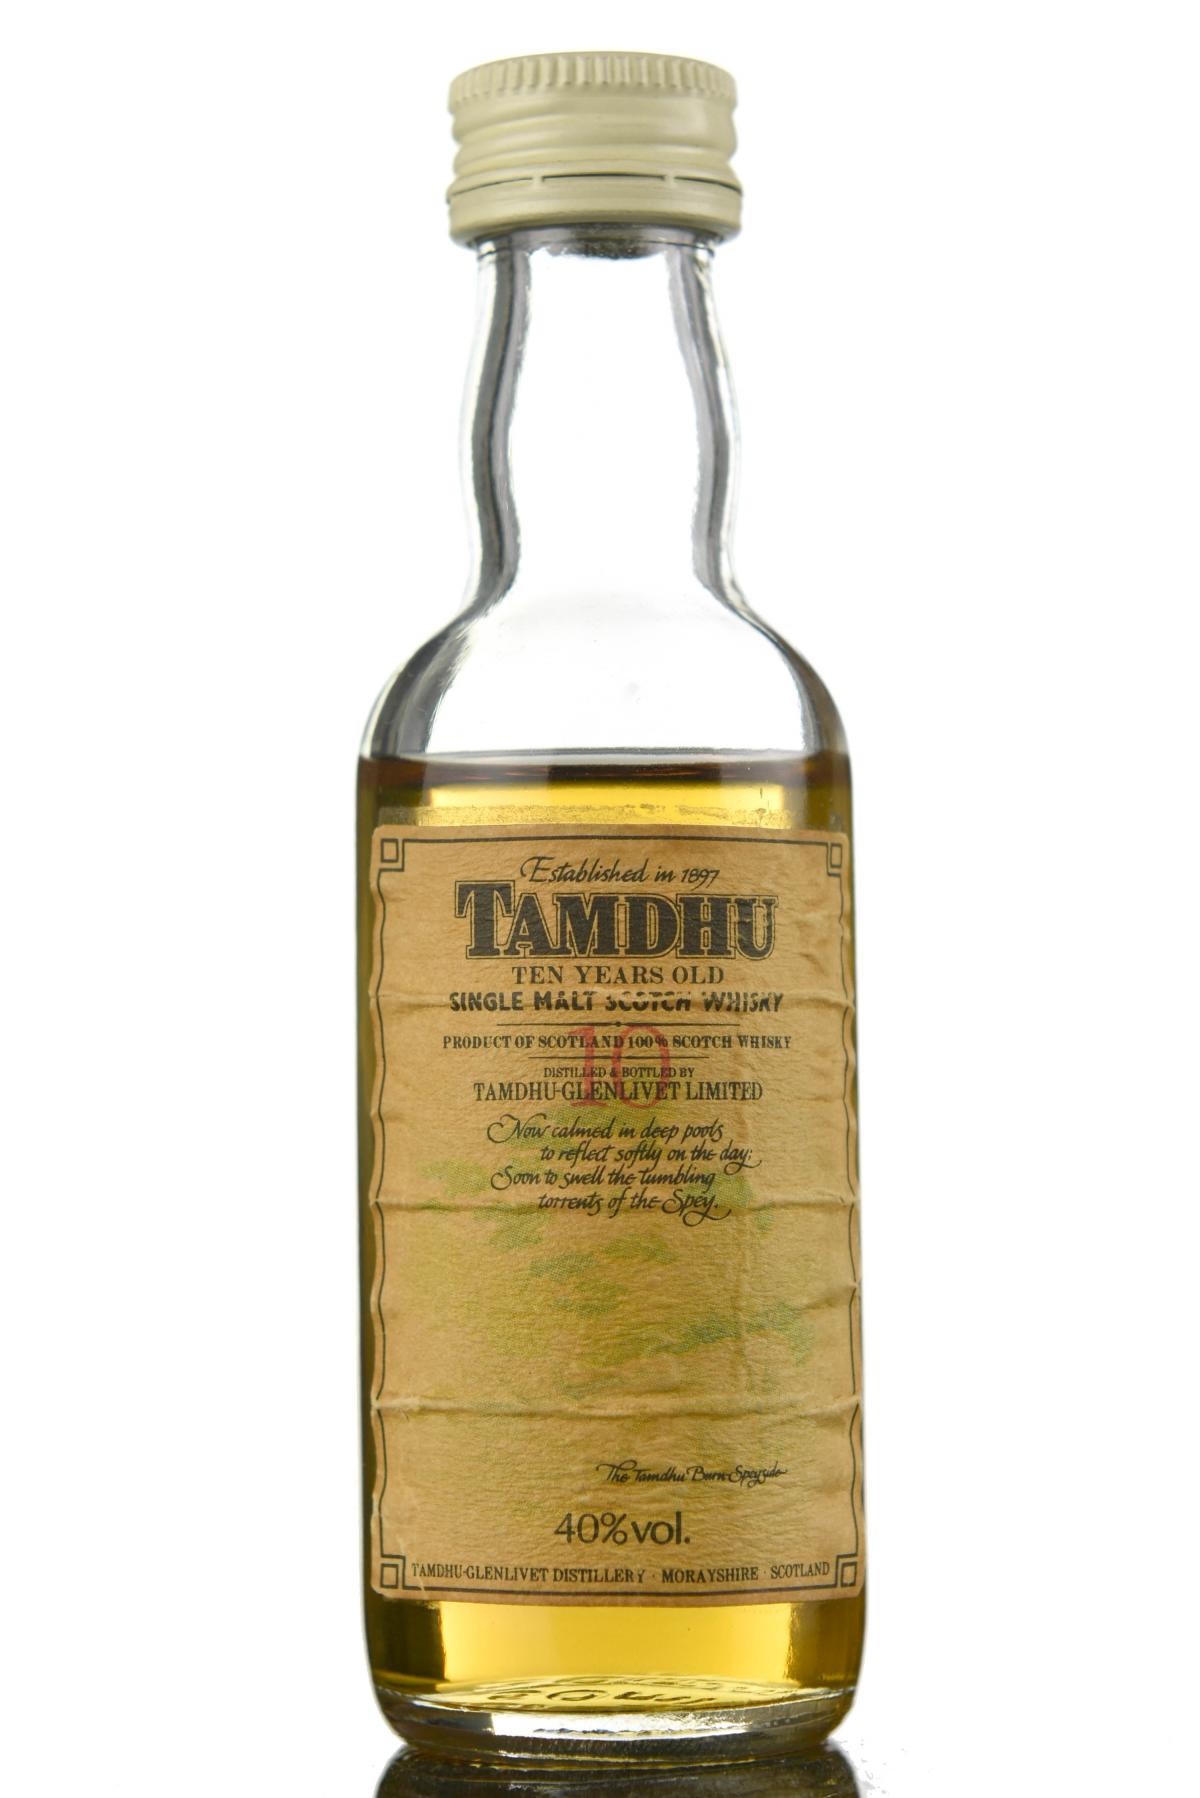 Tamdhu 10 Year Old Miniature